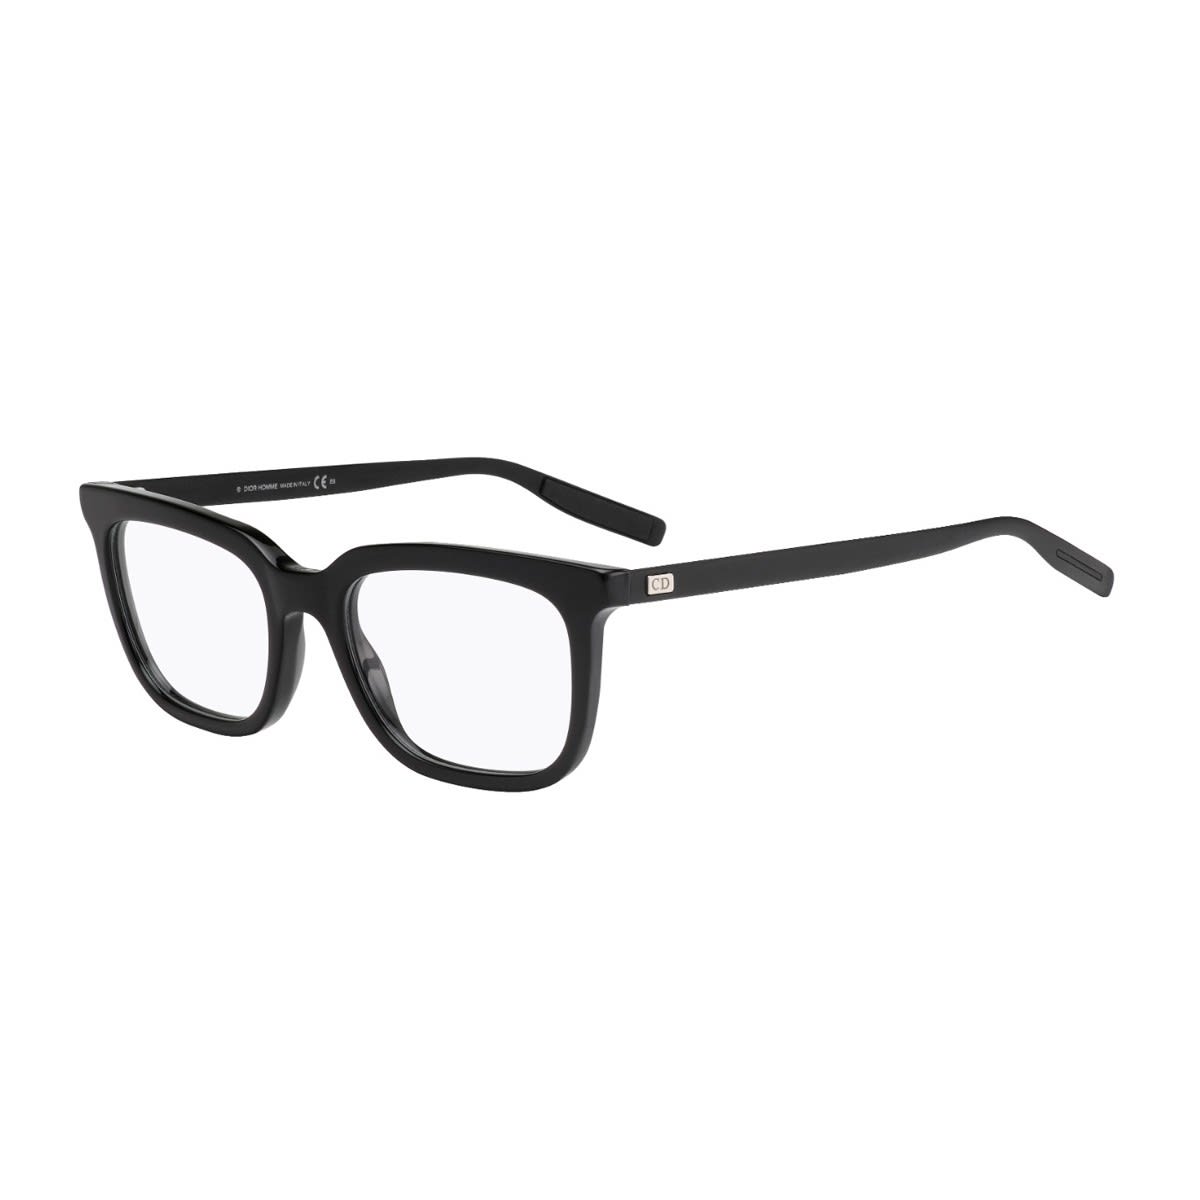 Blacktie 216 Glasses